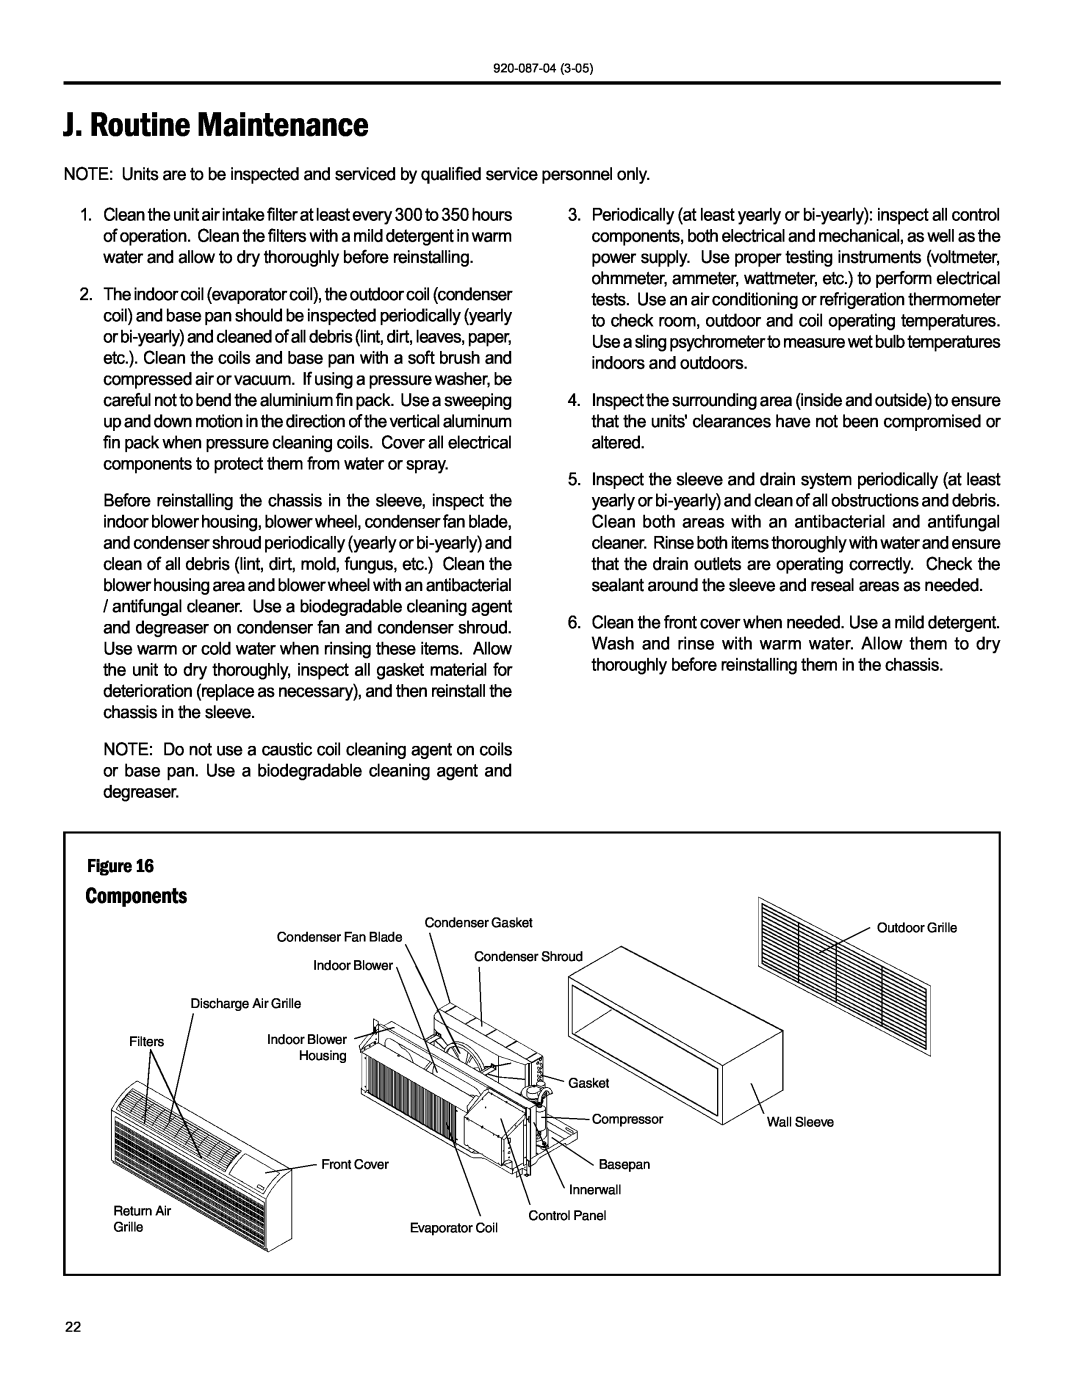 Friedrich 920-087-04 (3-05) manual J. Routine Maintenance, Components 